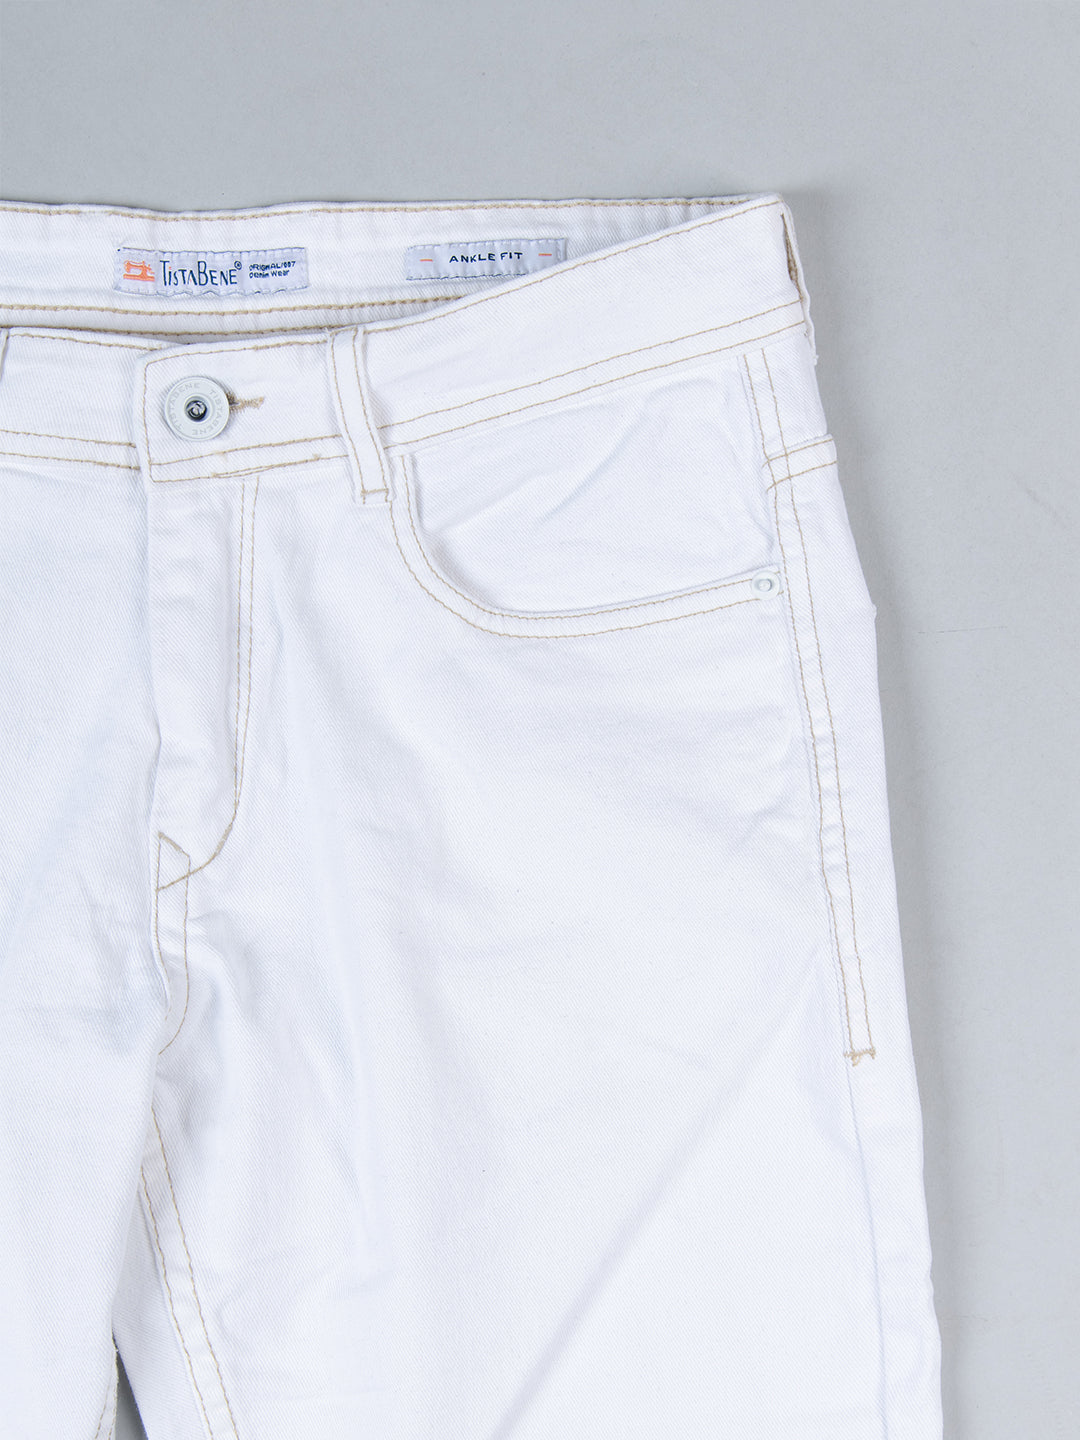 white denim jeans